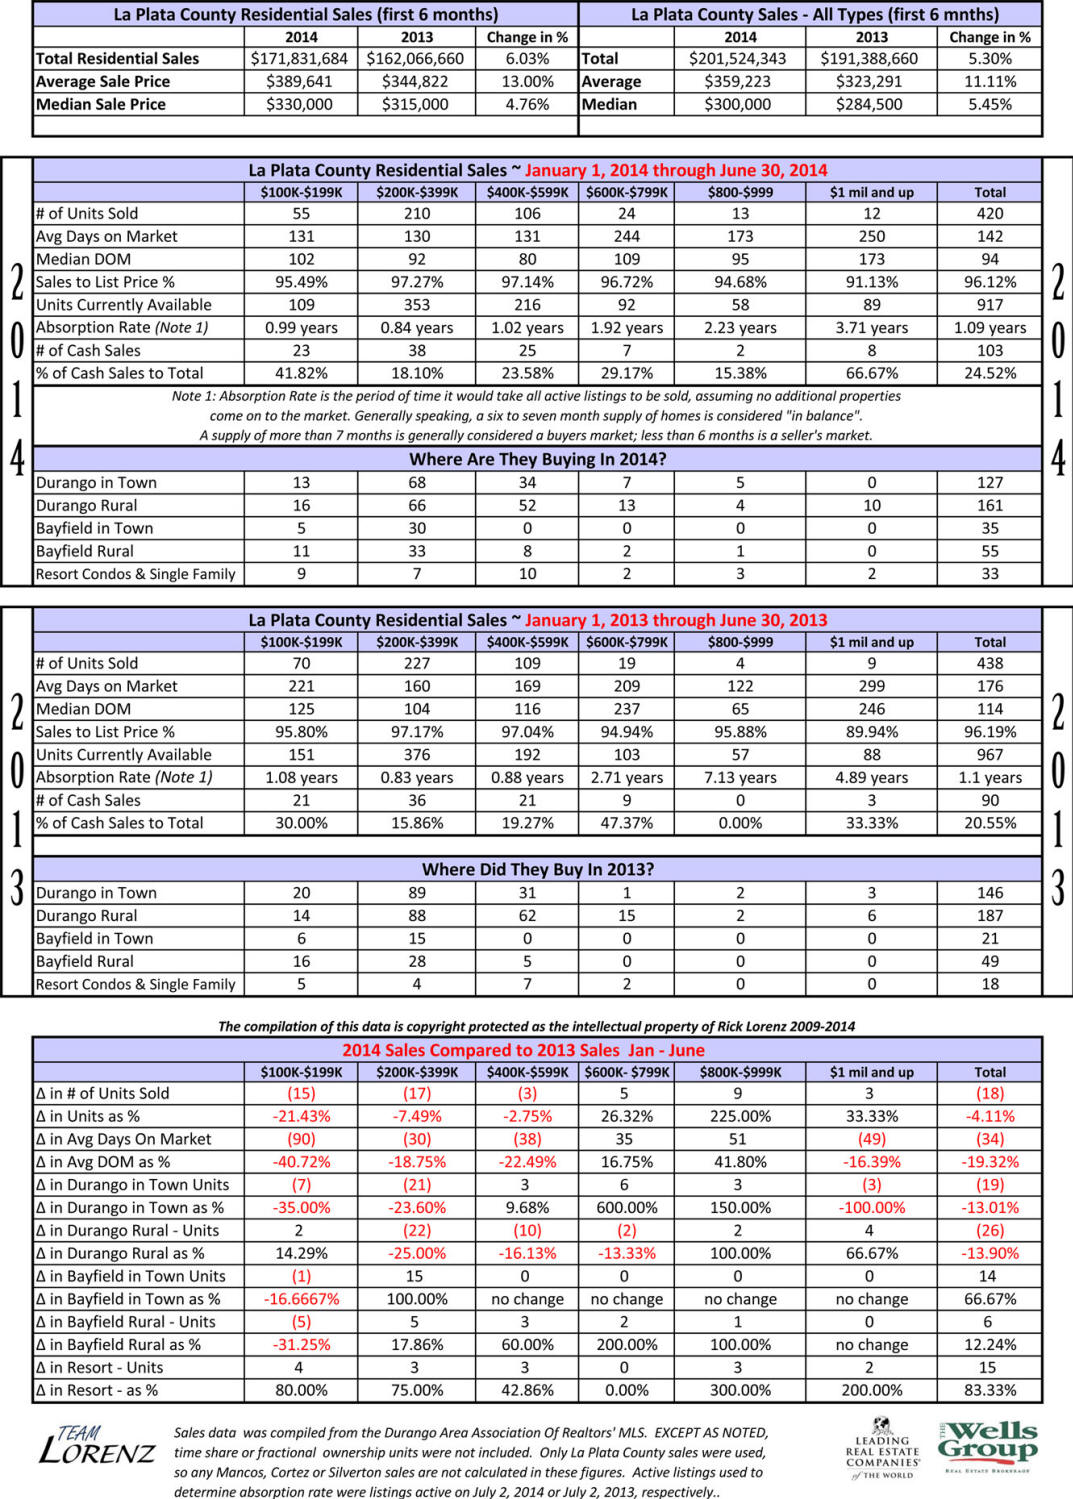 Durango Real Estate Comparative Statistics 2013-2014 First 6 Months